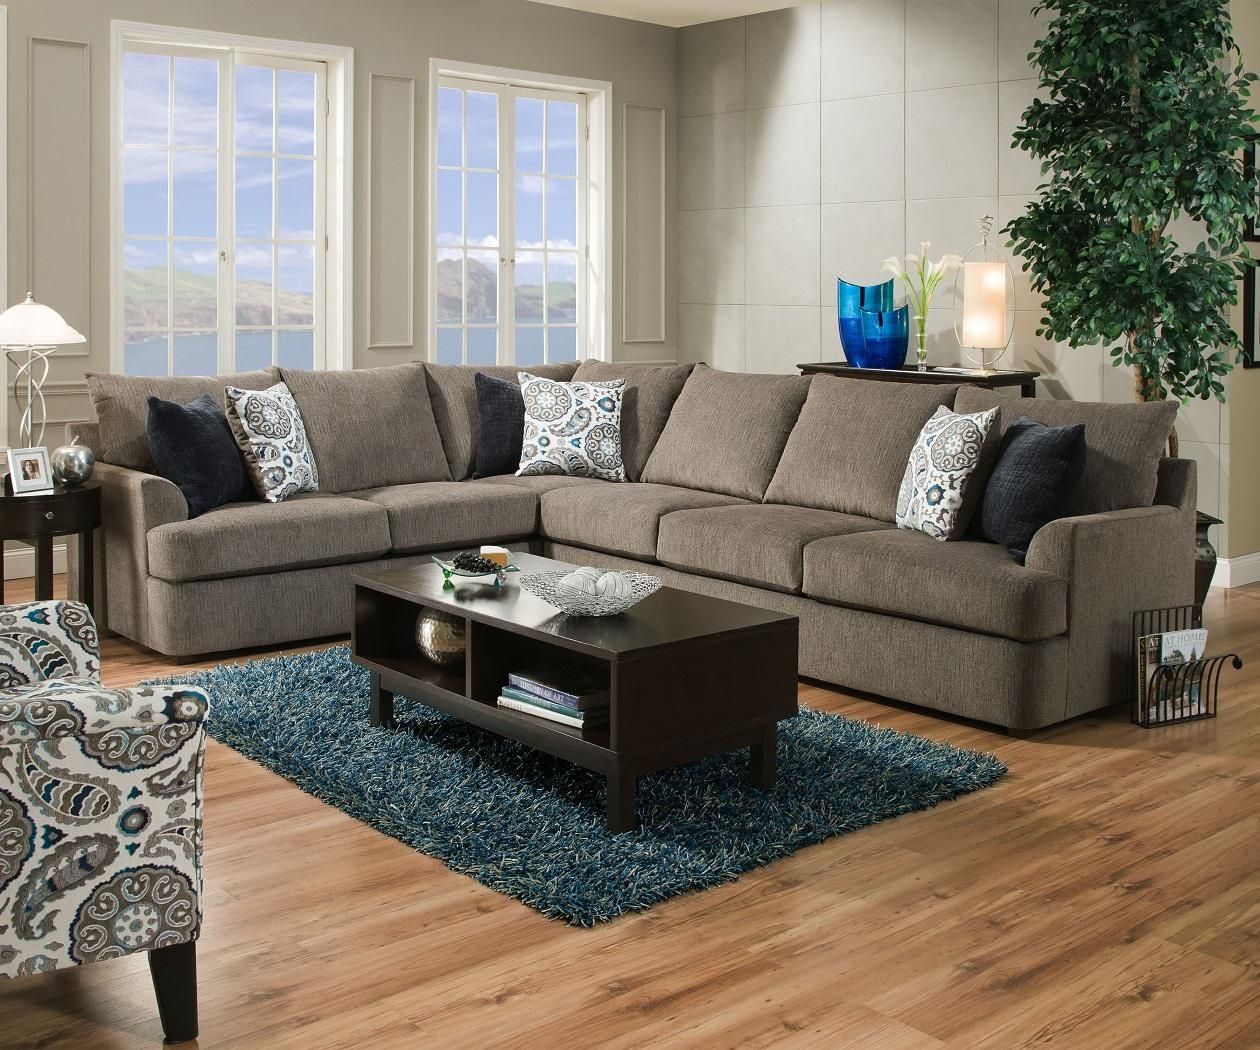 Sofa : Leather Sofas Orange County Home Design Great Luxury To For Sofa Orange County (View 13 of 20)